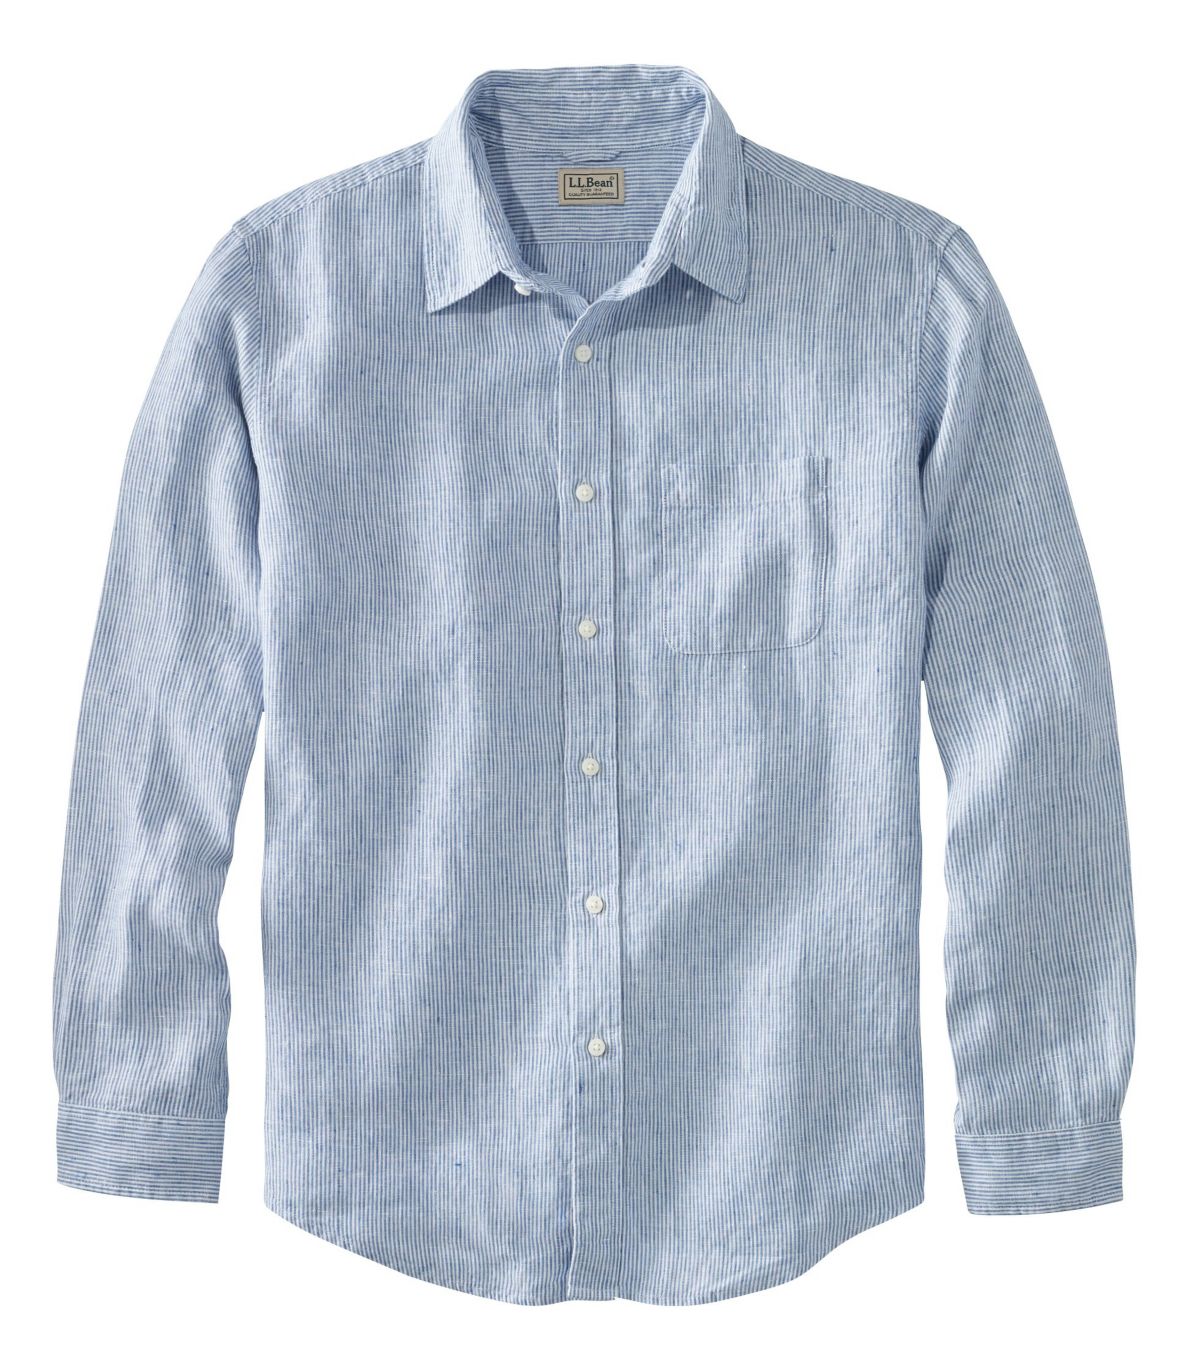 Men's L.L.Bean Linen Shirt, Slightly Fitted Long-Sleeve Stripe at L.L. Bean